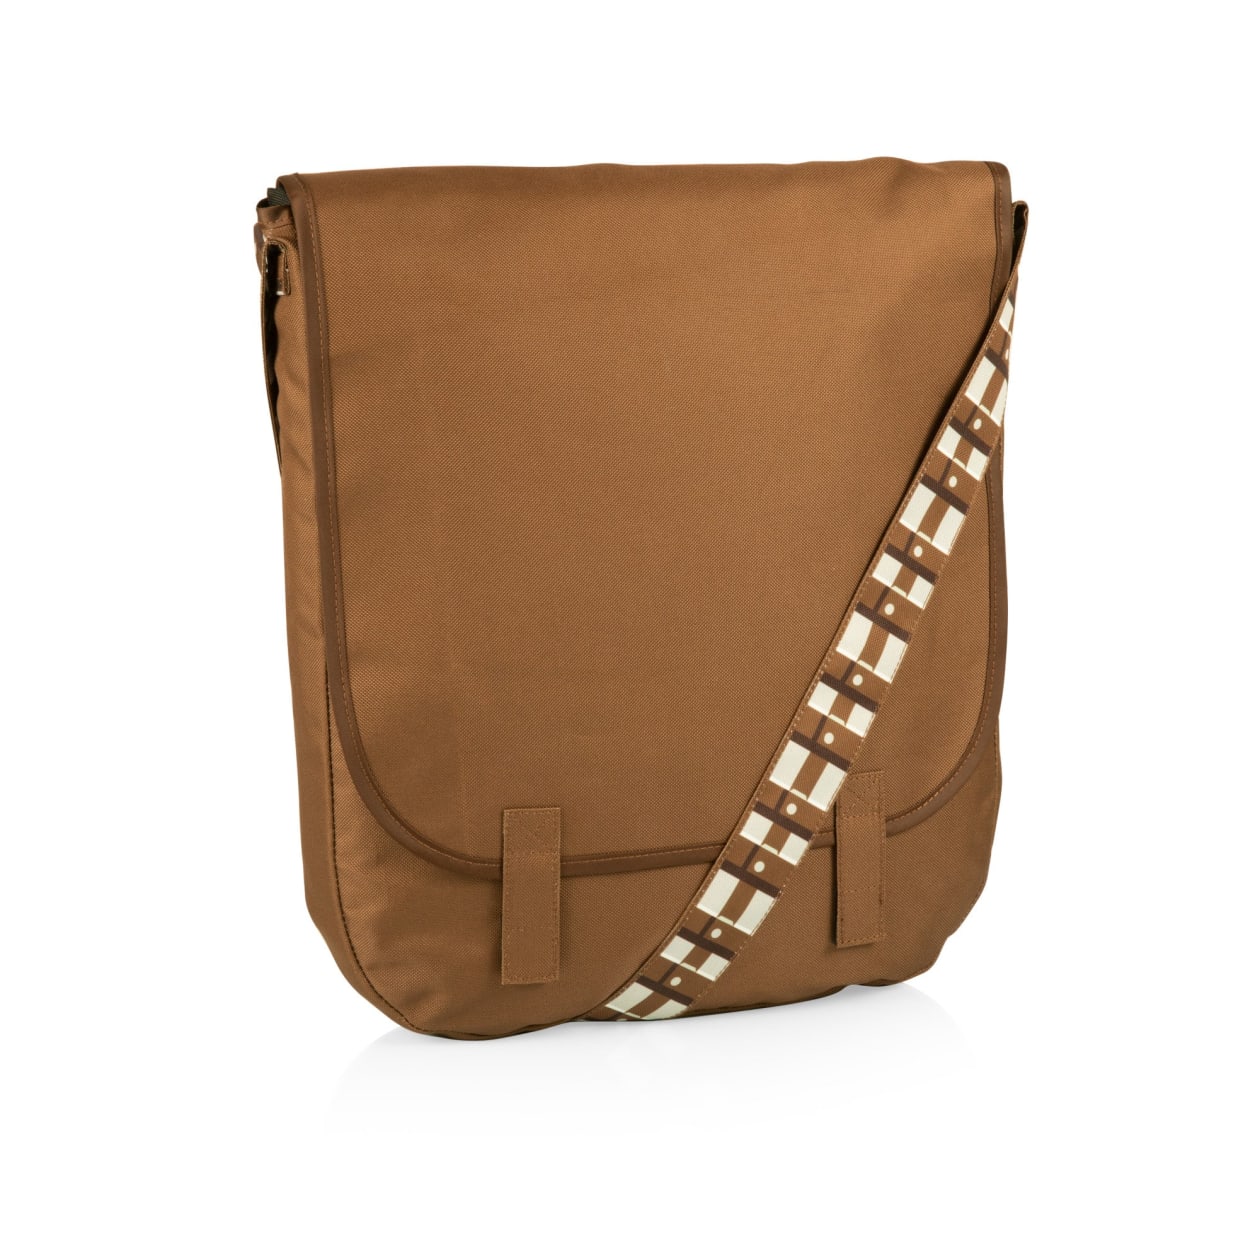 Star Wars Millennium Falcon - Blanket in a Bag - Color: Brown with Millennium Falcon Design